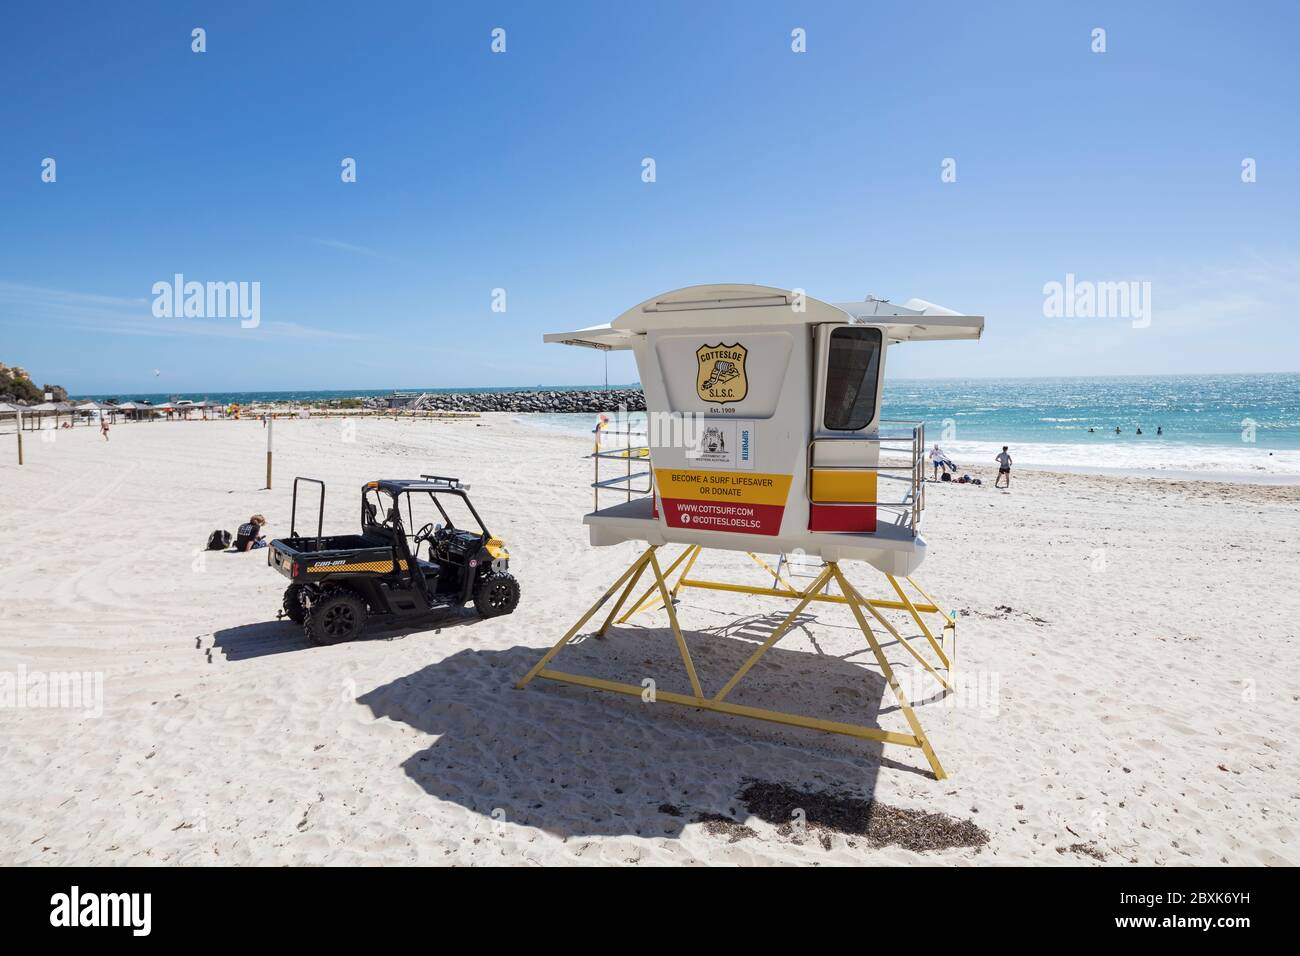 Freemantle Australia November 5th 2019: Surf lifesaving cabin on Cottesloe Beach in Perth, Western Australia Stock Photo